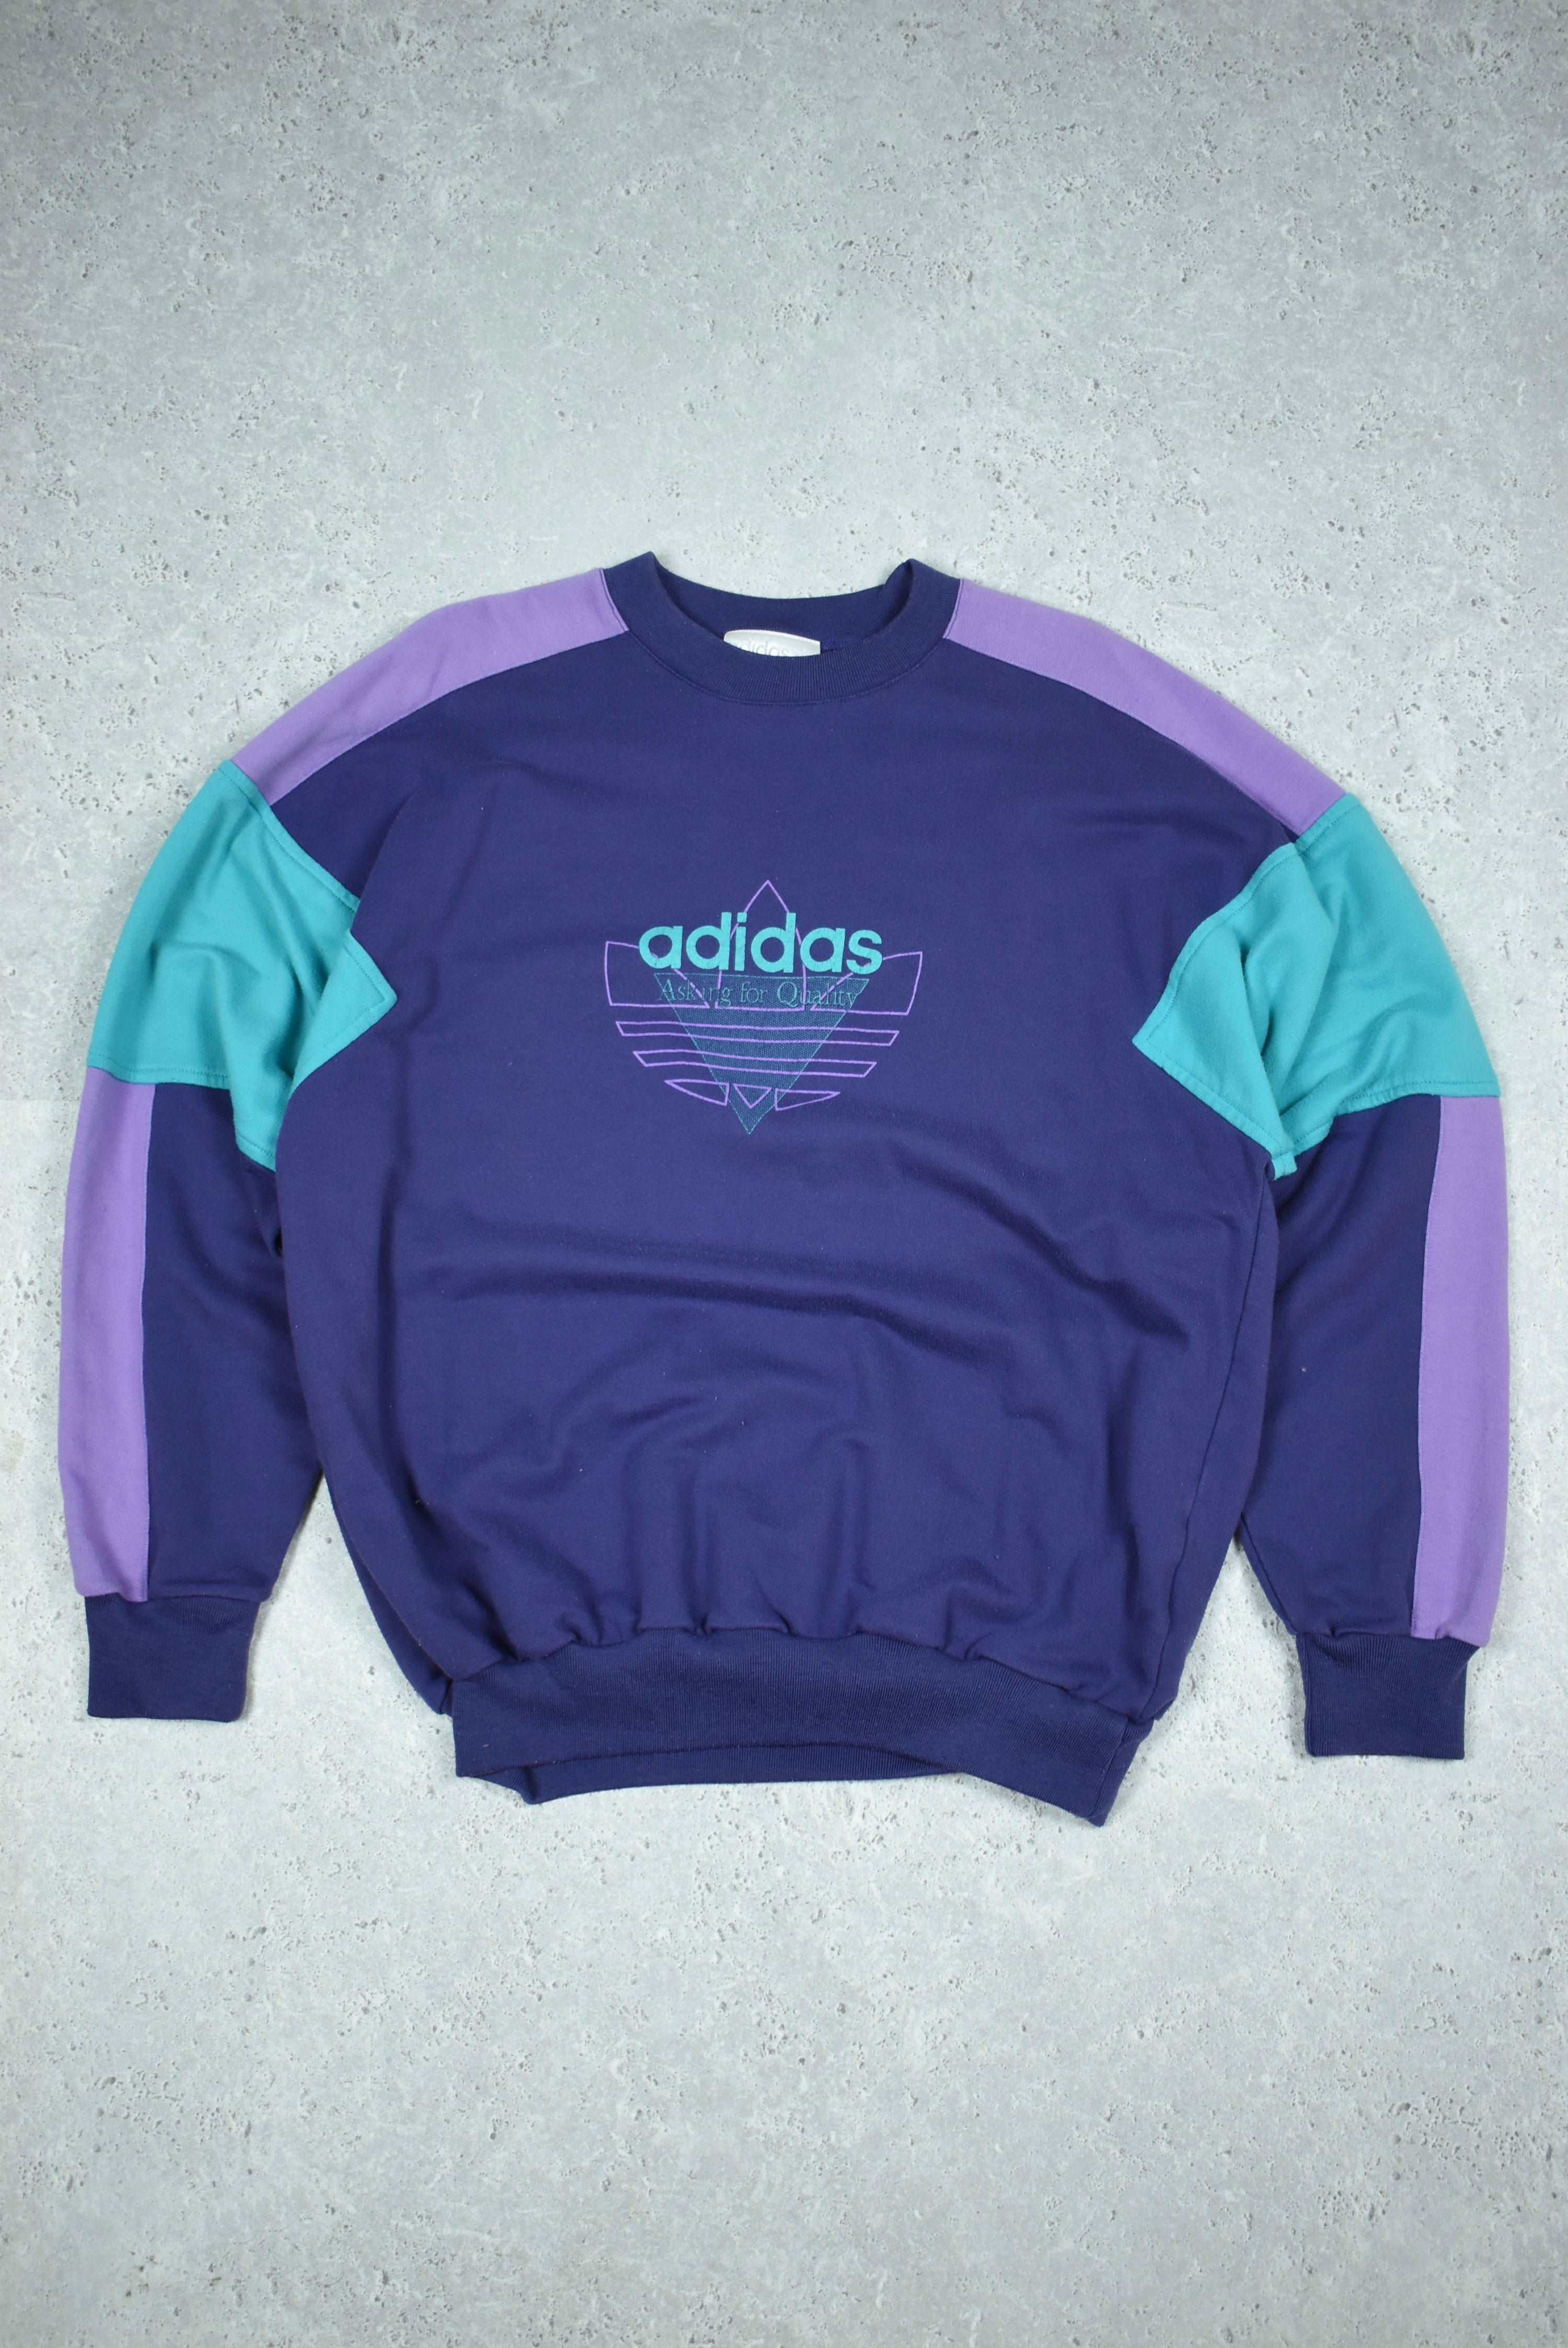 Vintage Adidas 80s Print Sweatshirt Small